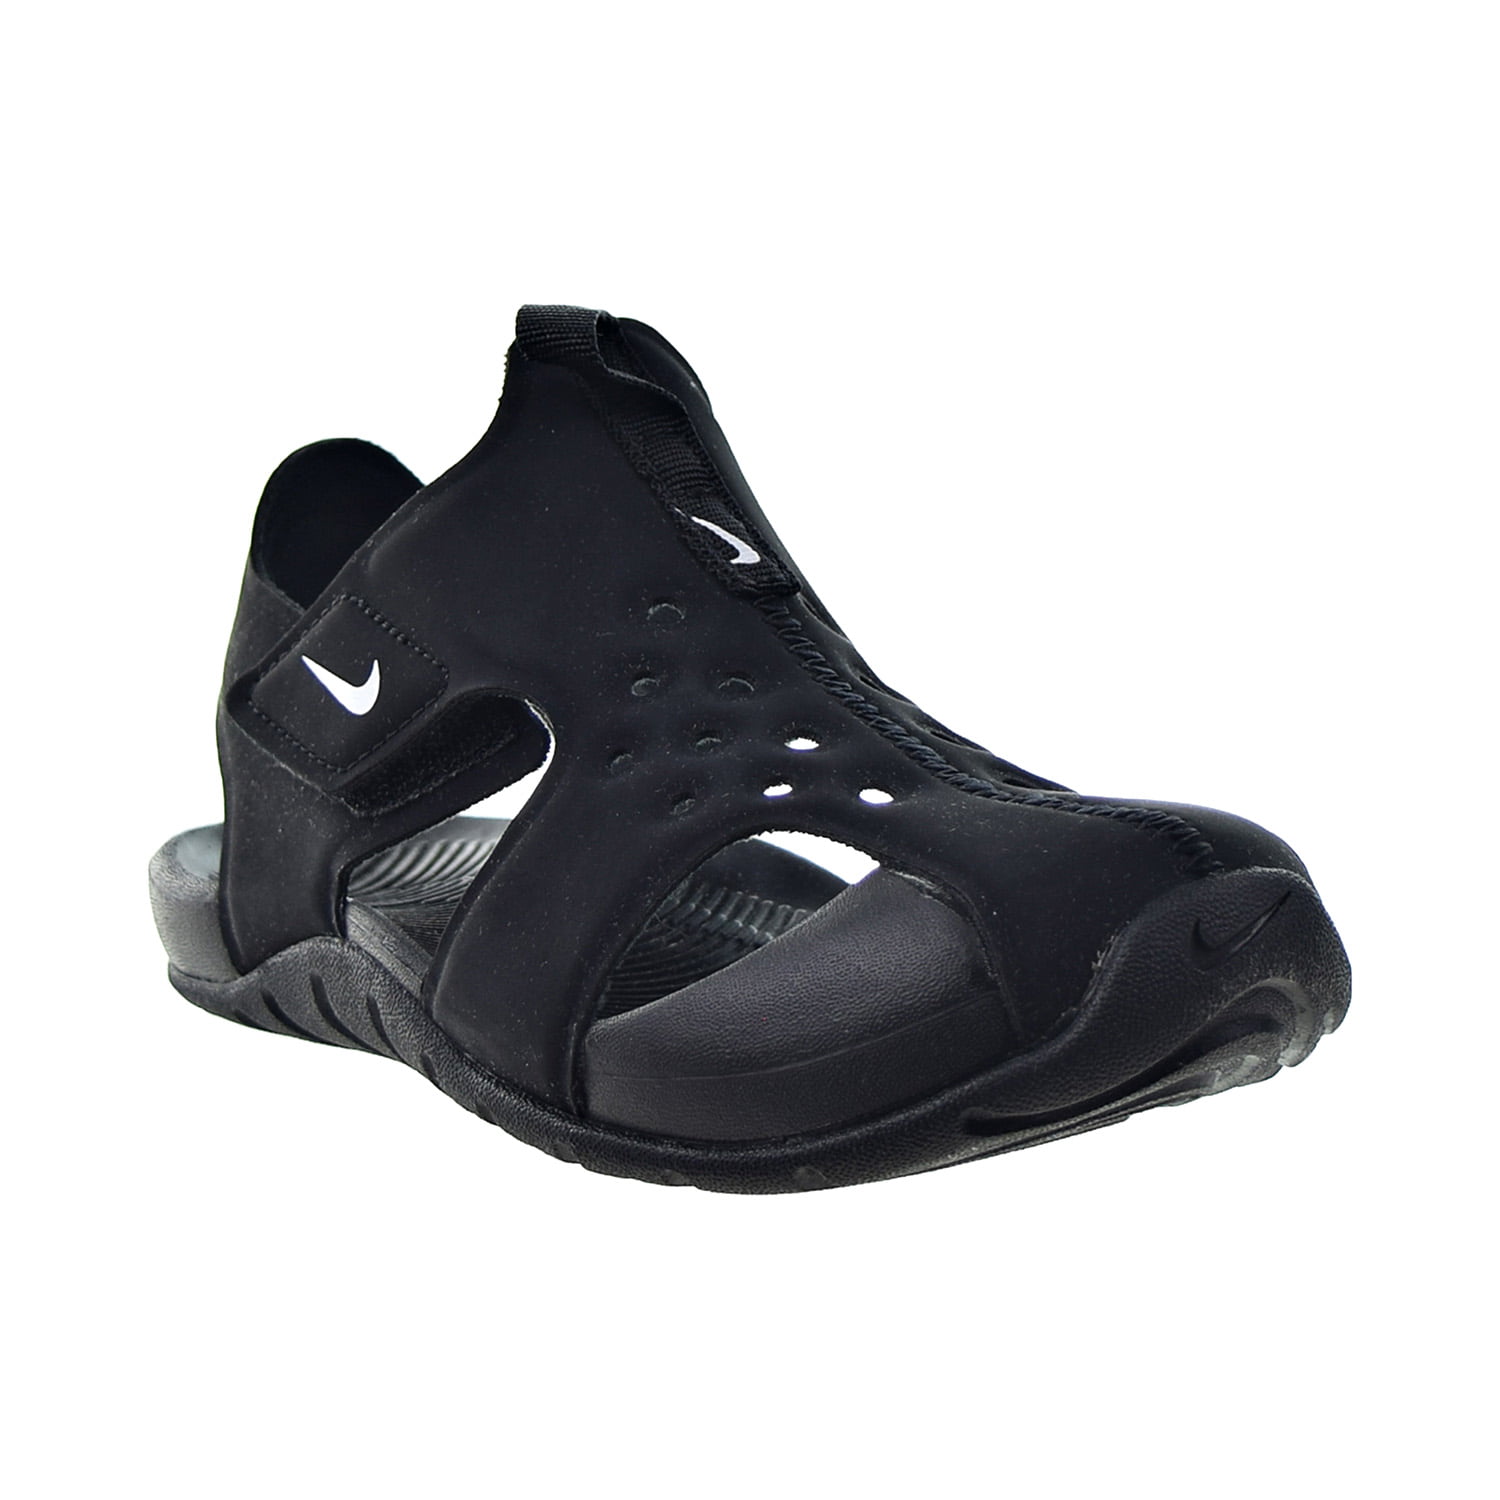 Nike Sunray 2 Little Kids' Sandals Black-White 943826-001 - Walmart.com